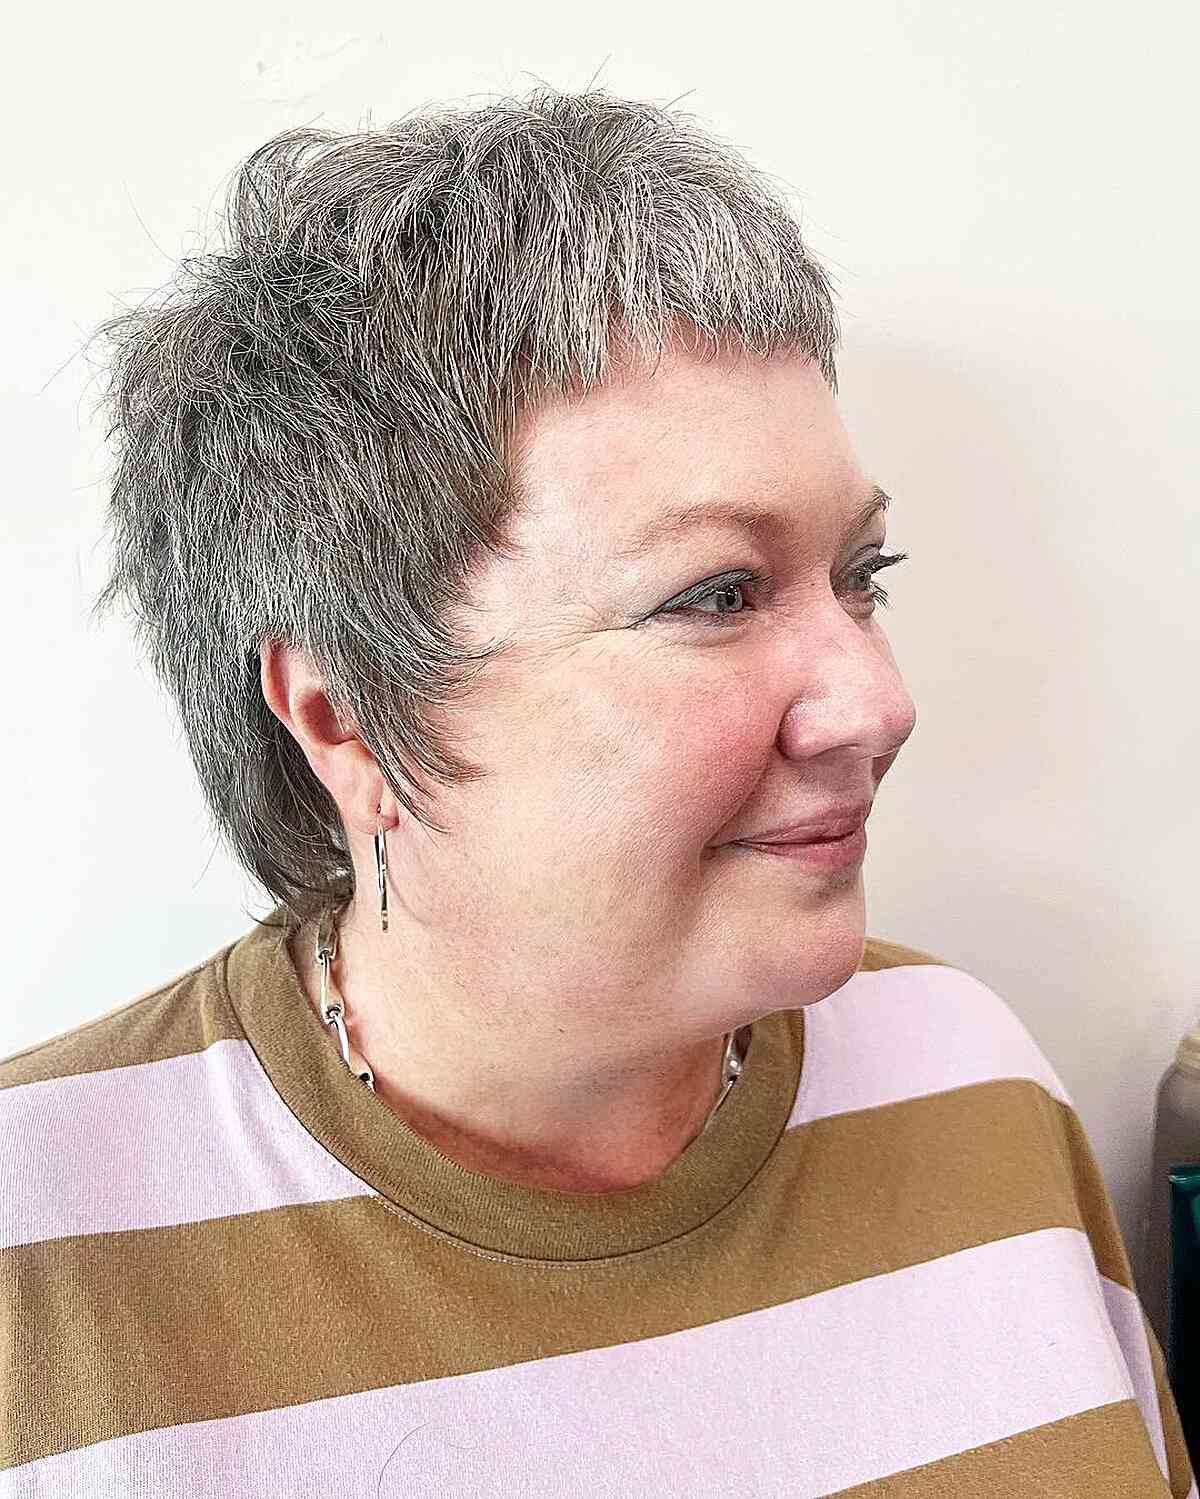 Grey Choppy Pixie Cut for Older Women in Their 50s